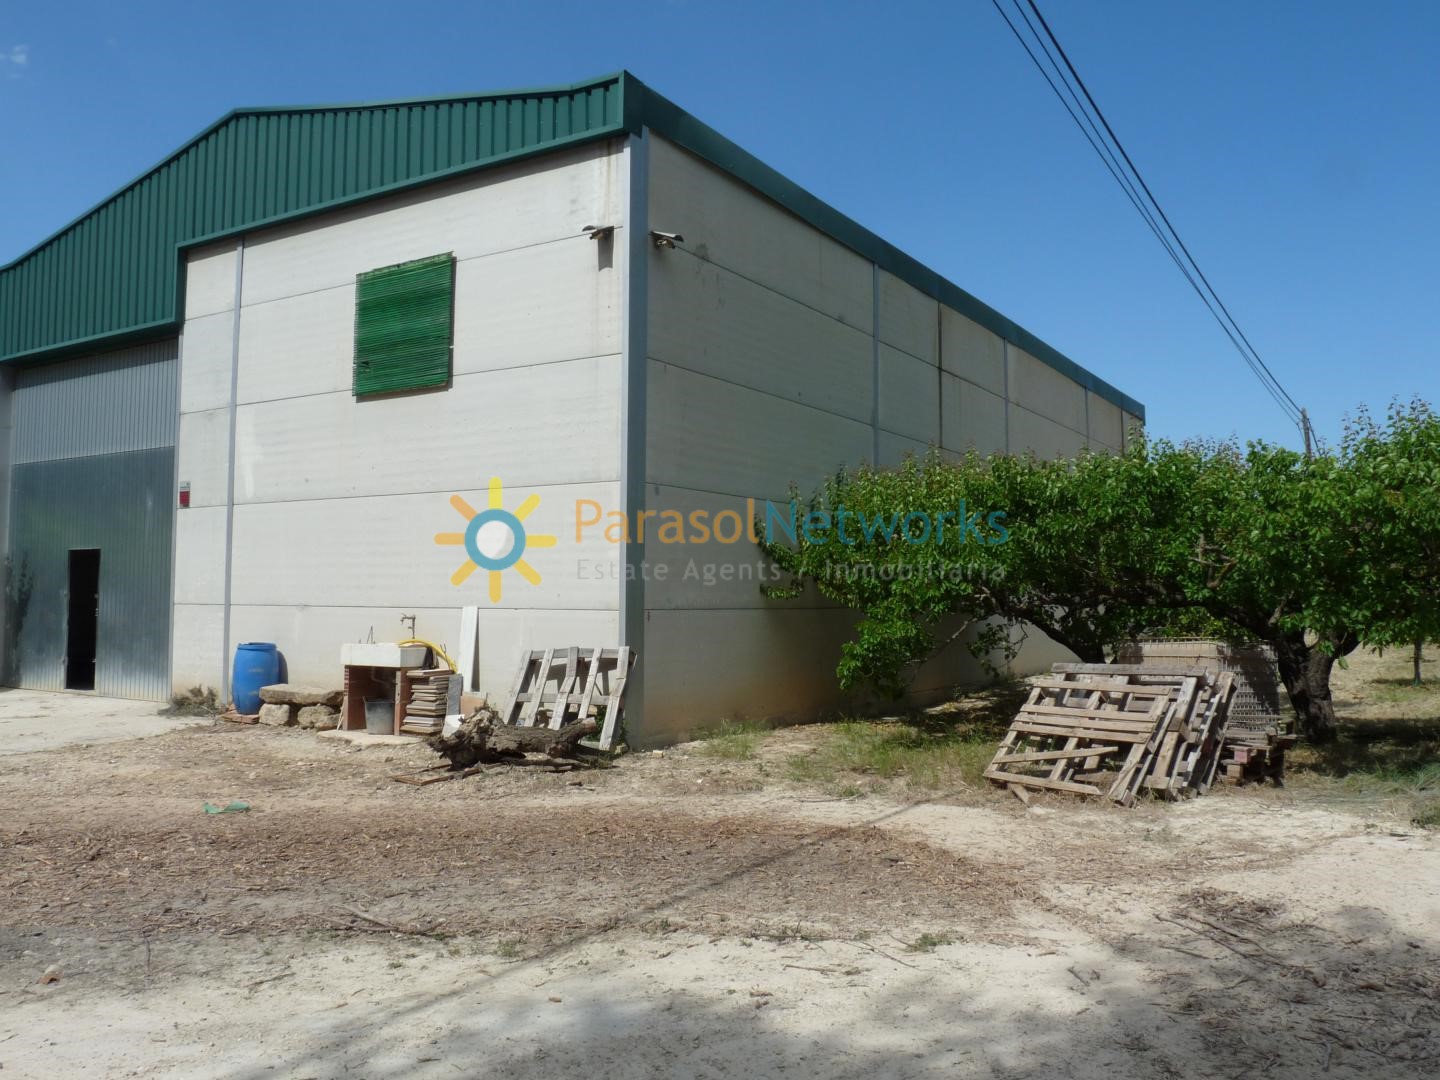 Plot for sale in Adzeneta de Albaida – Ref: 221